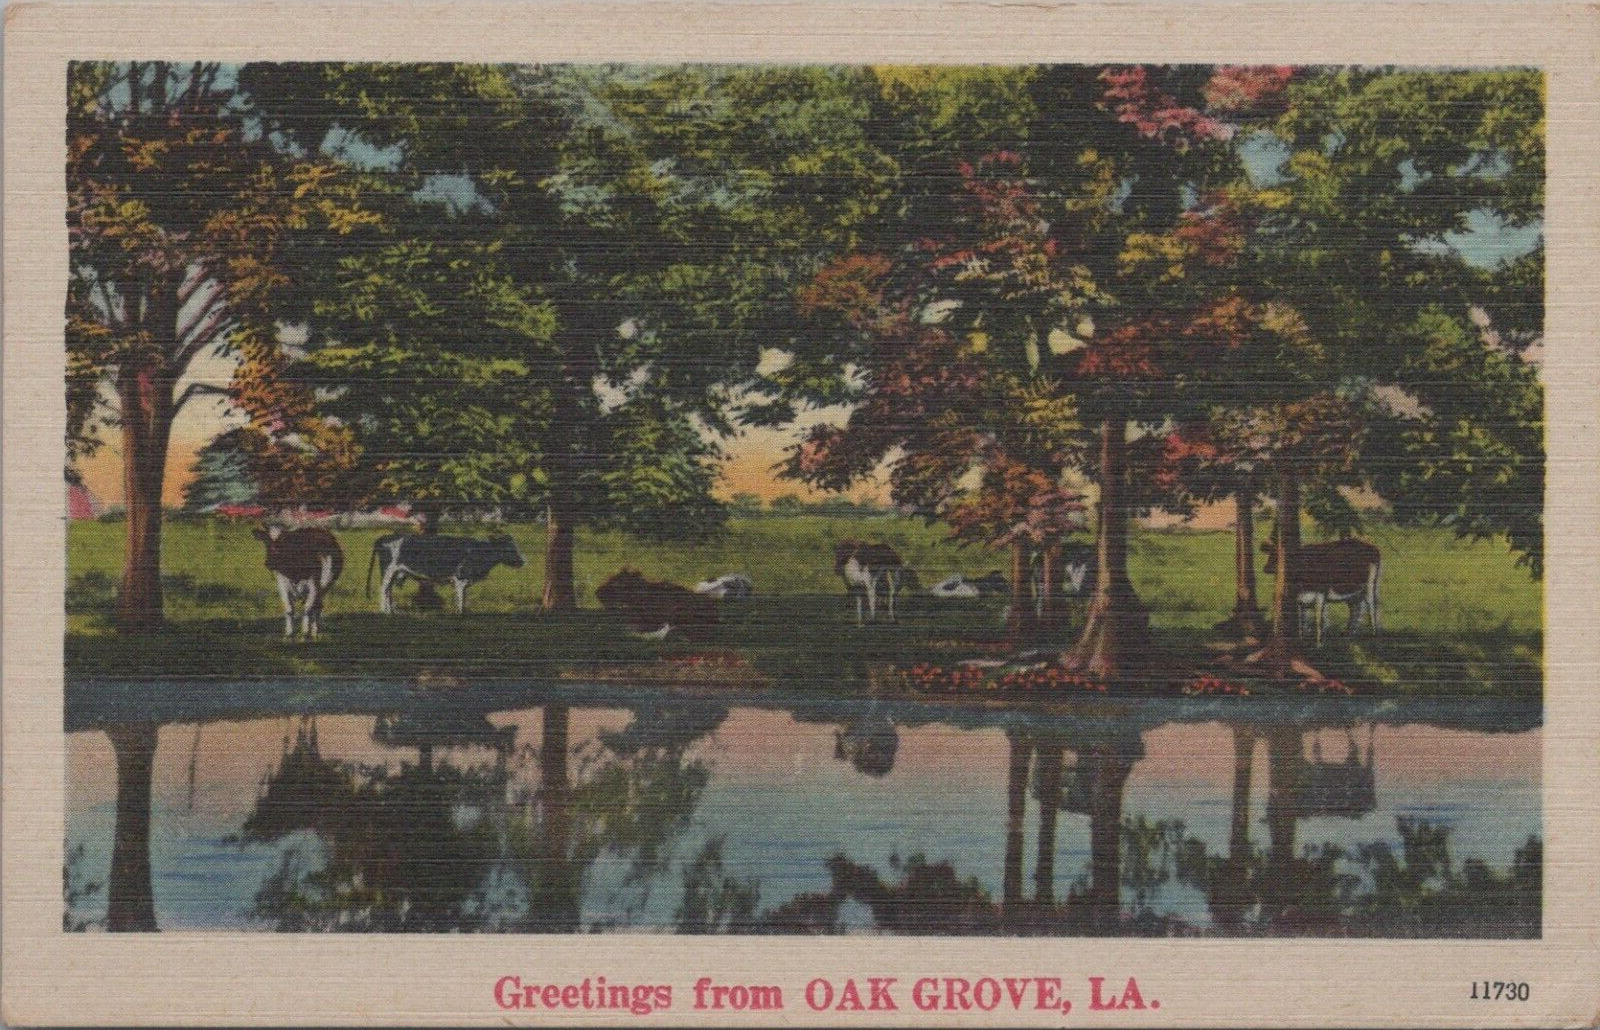 Oak Grove Louisiana Greetings Cows Field Lake Quality Colored Landscape Linen PC